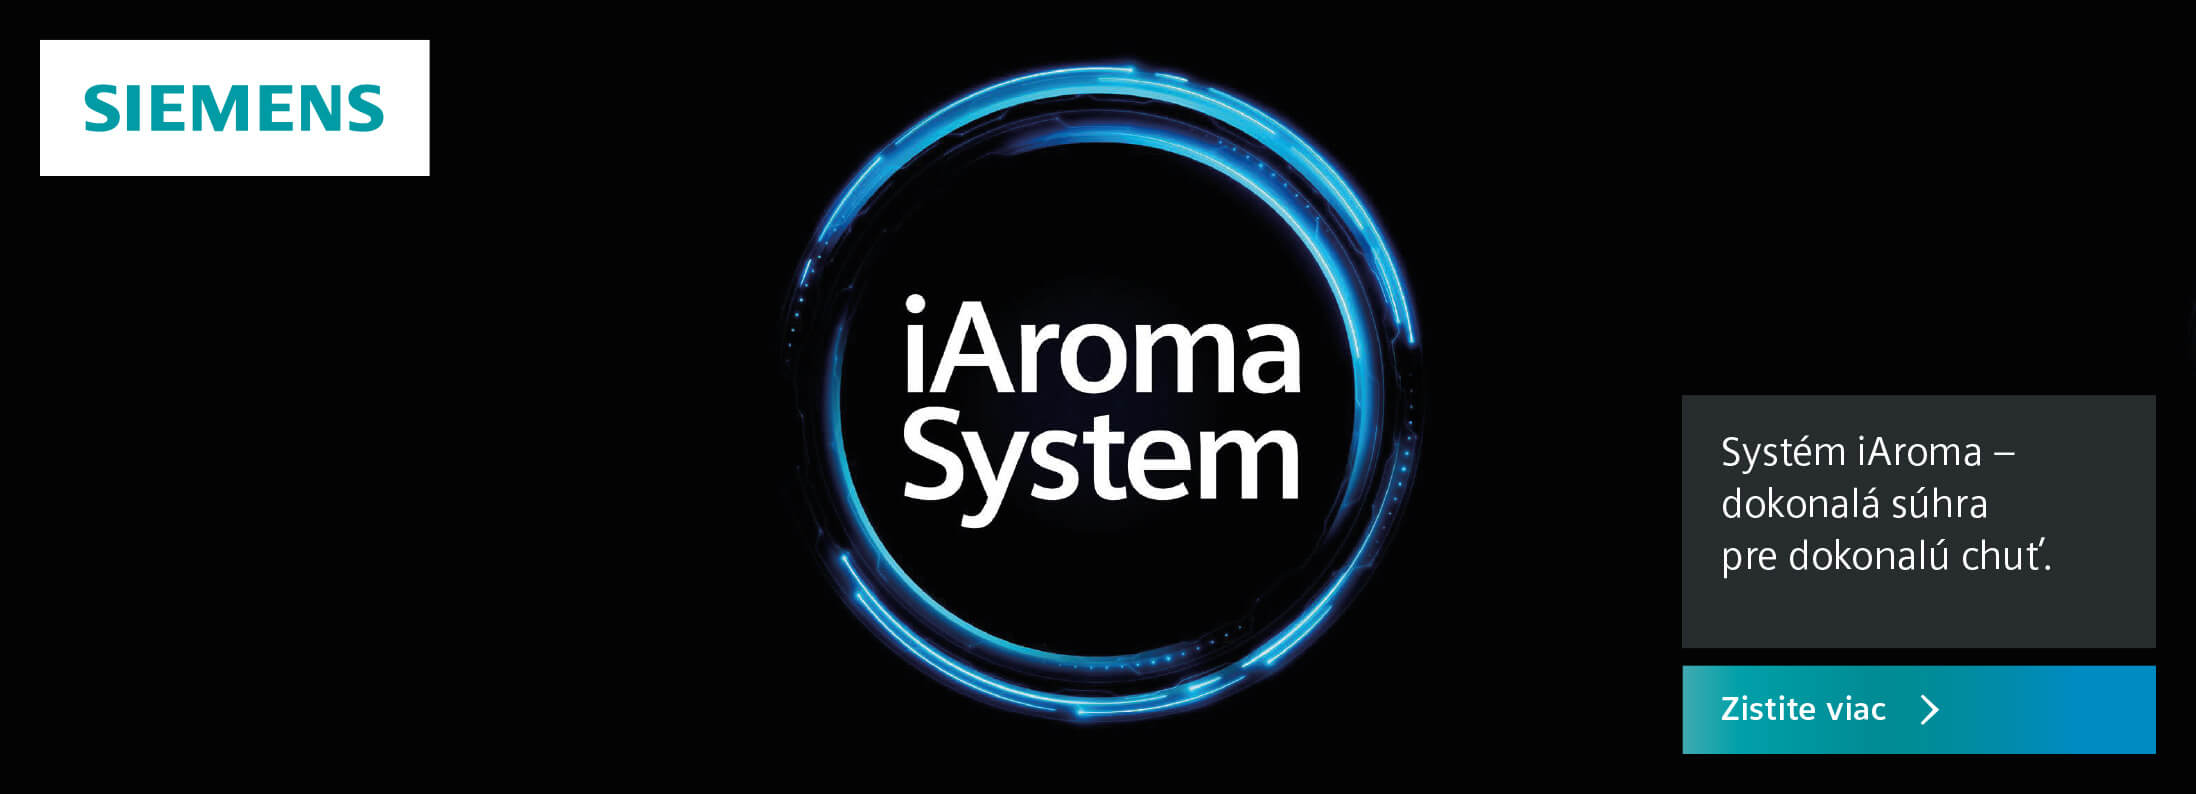 Siemens - Systém iAroma